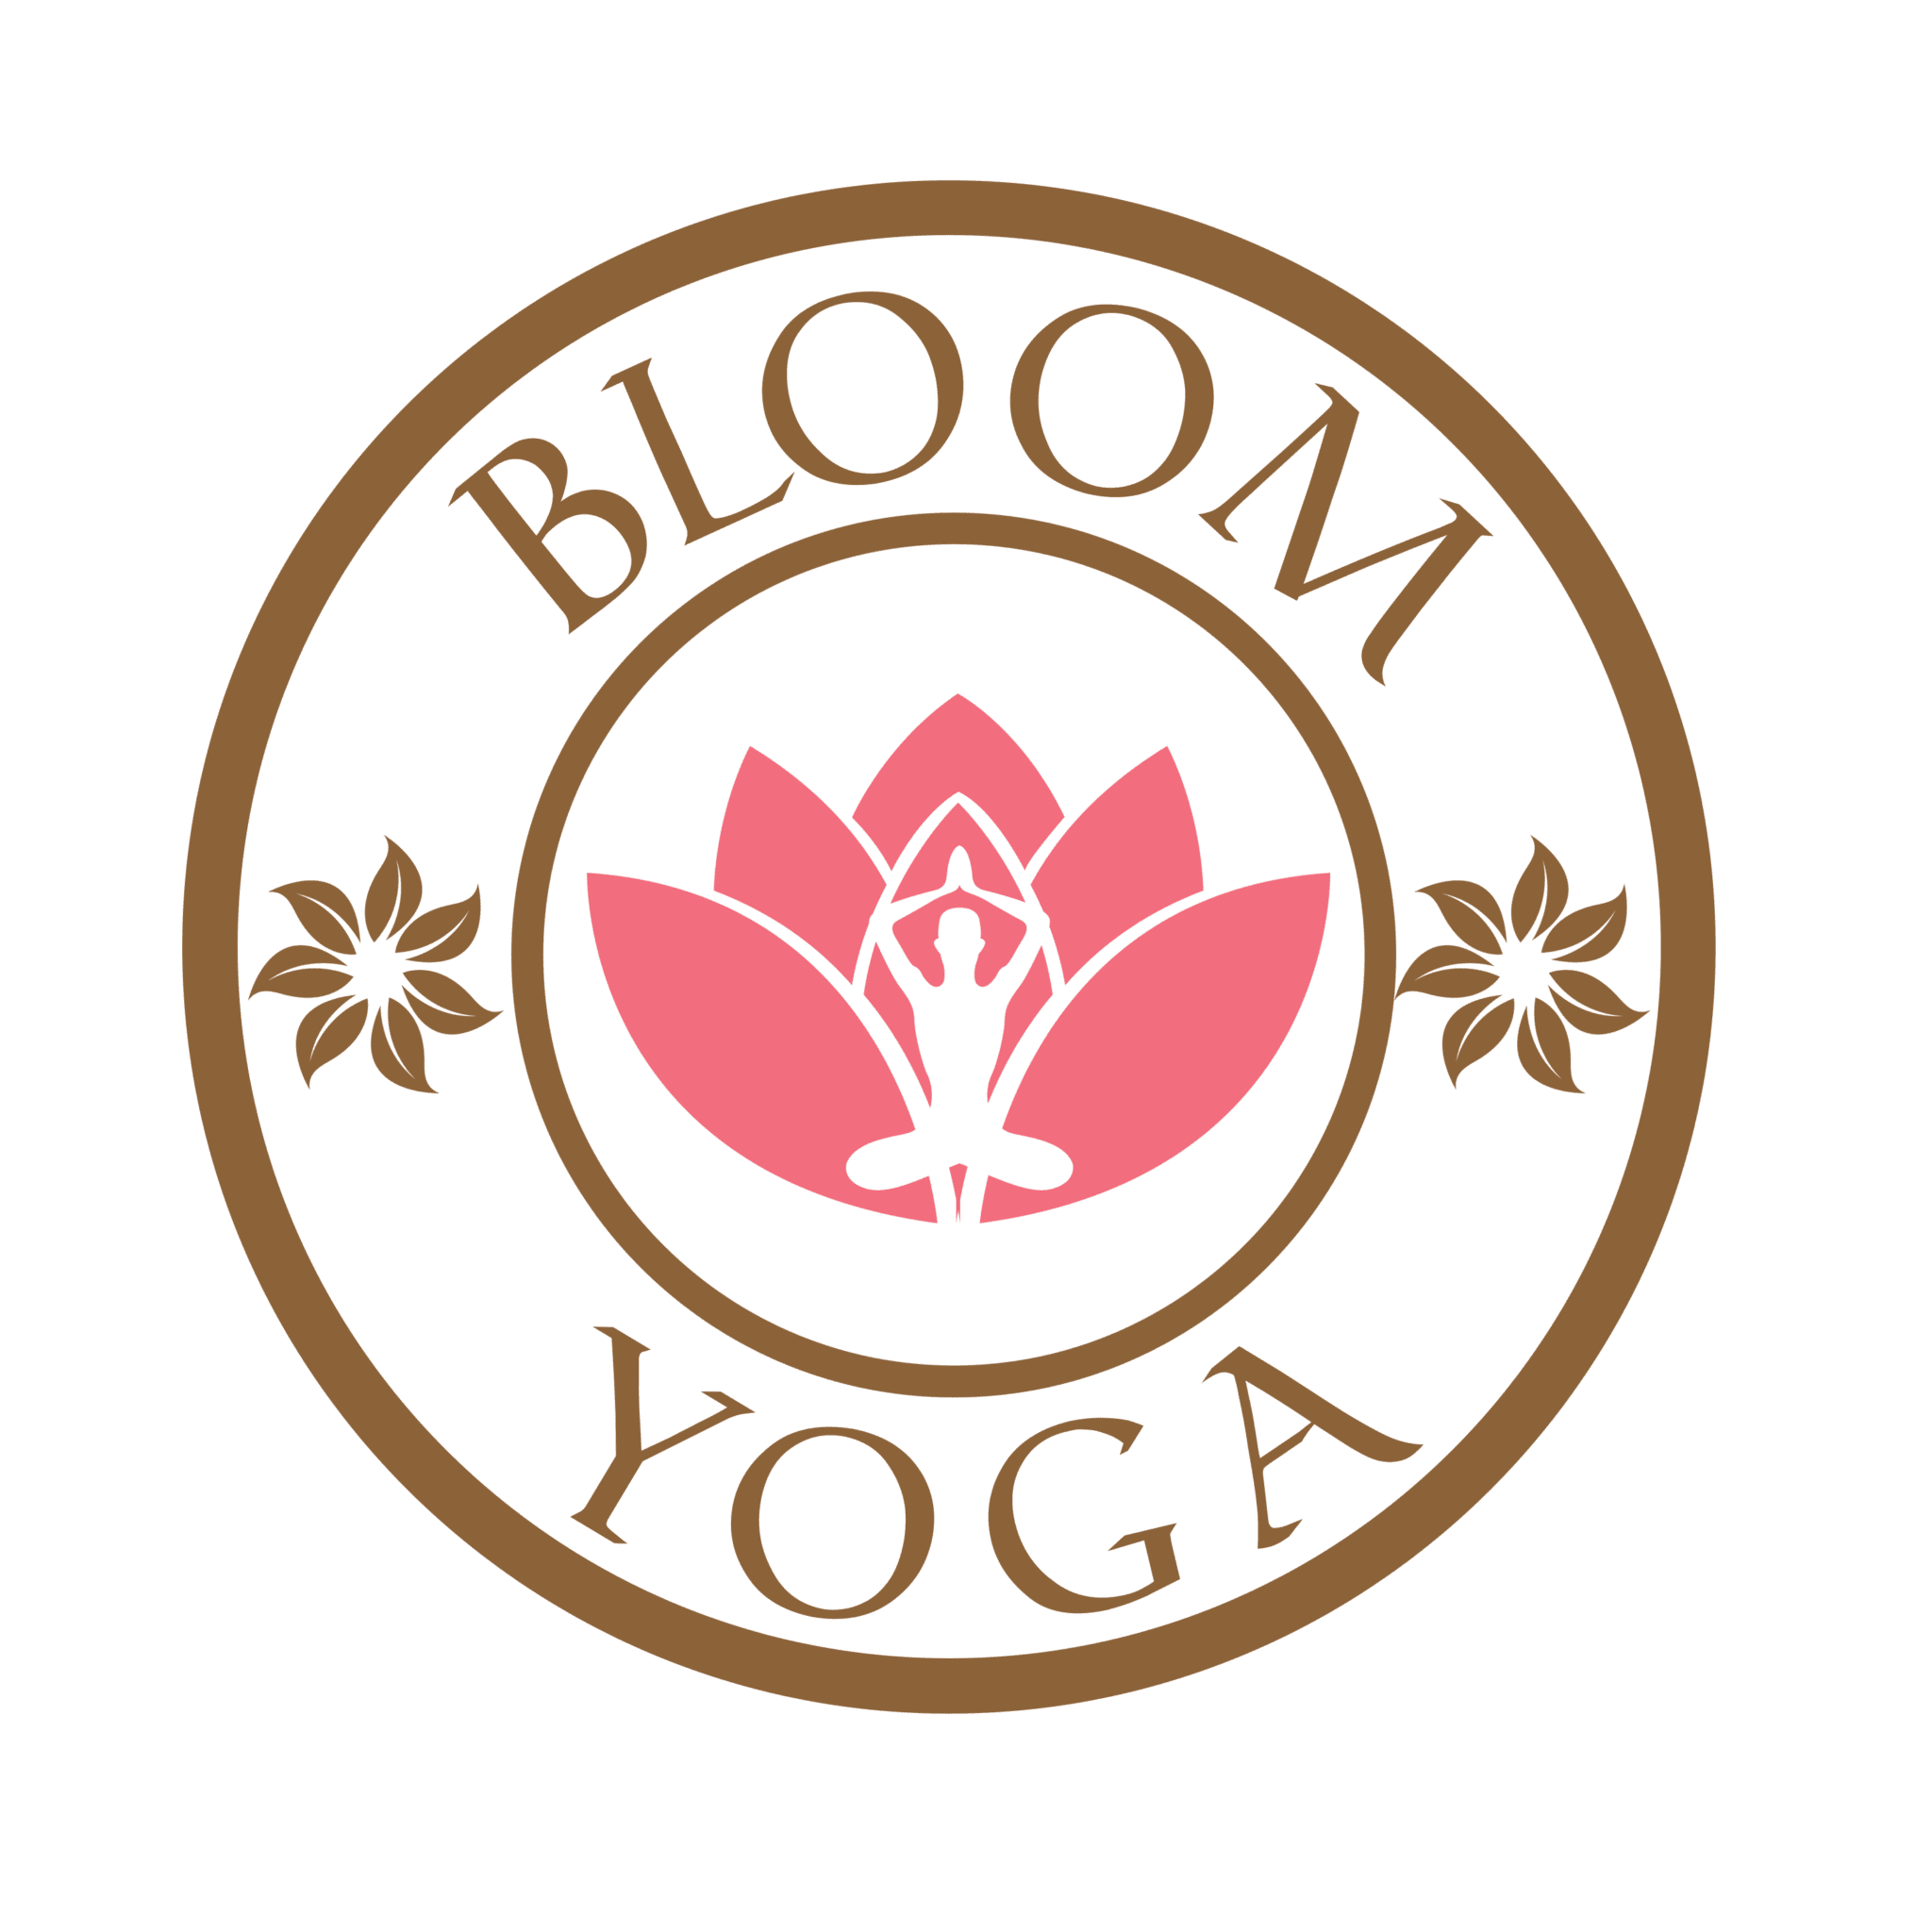 Bloom-Yoga-FINAL